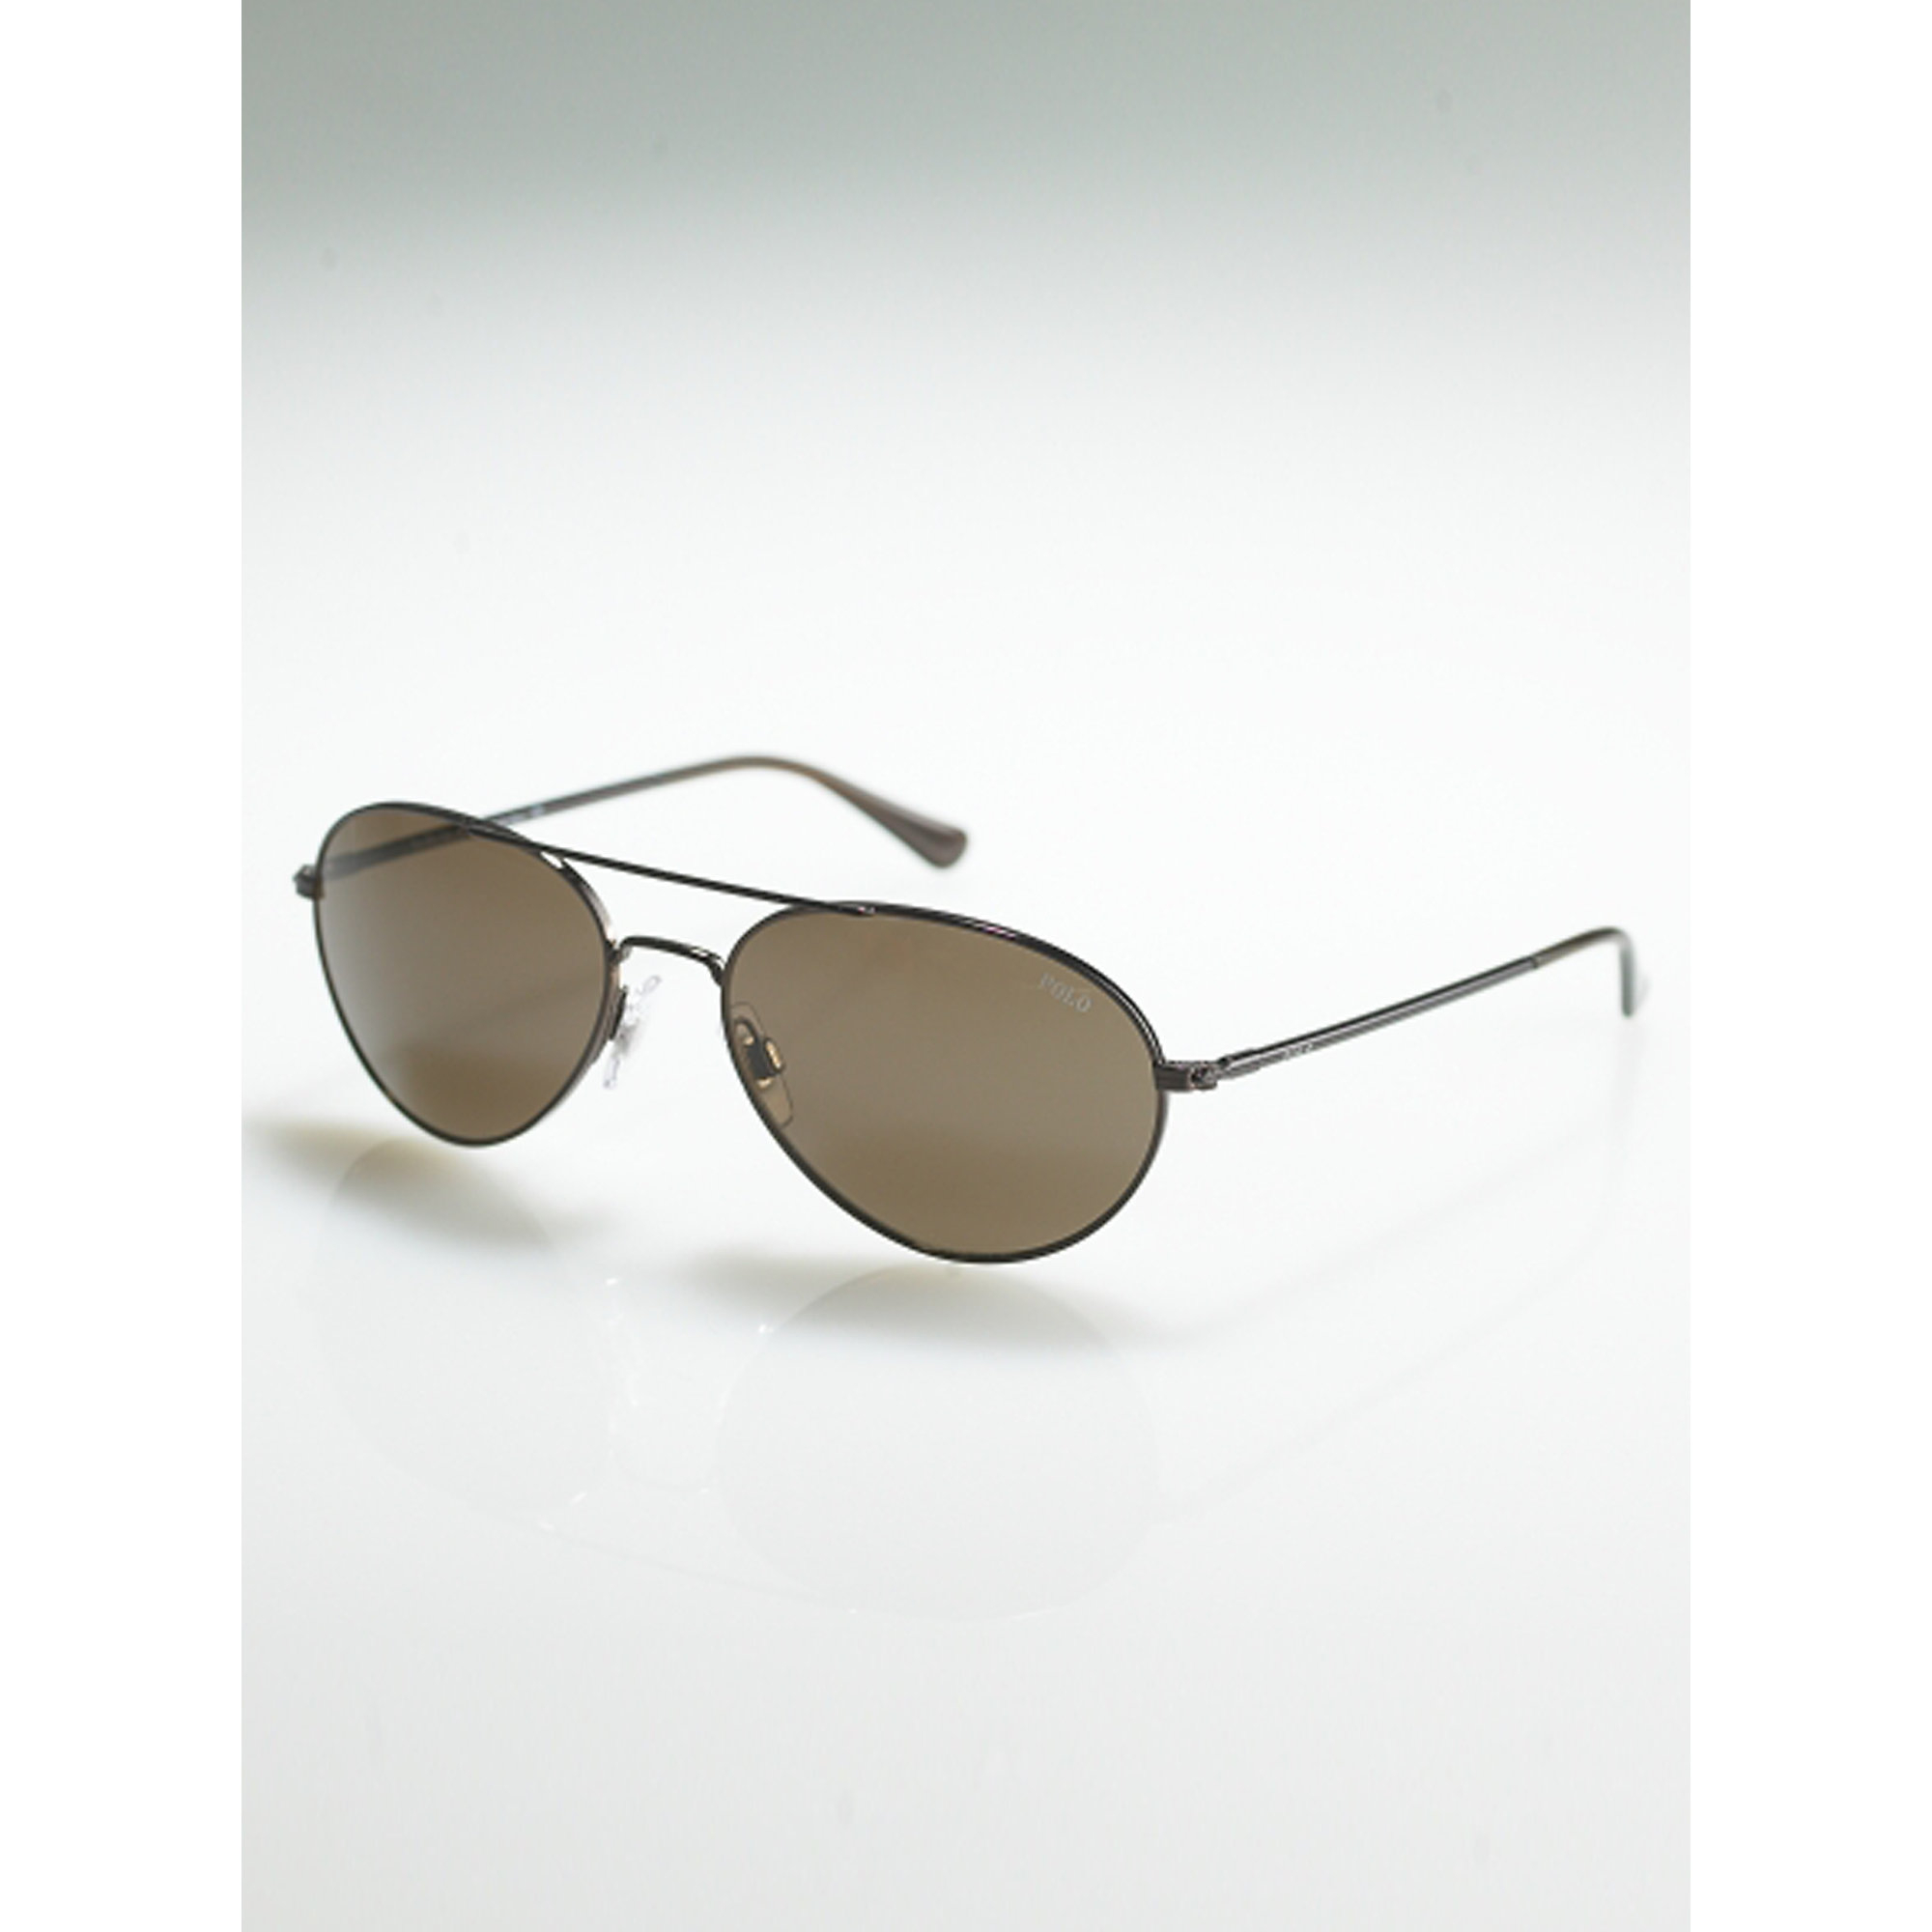 Polo Ralph Lauren Brown Classic Aviator Sunglasses Product 1 24381682 0 685348349 Normal 